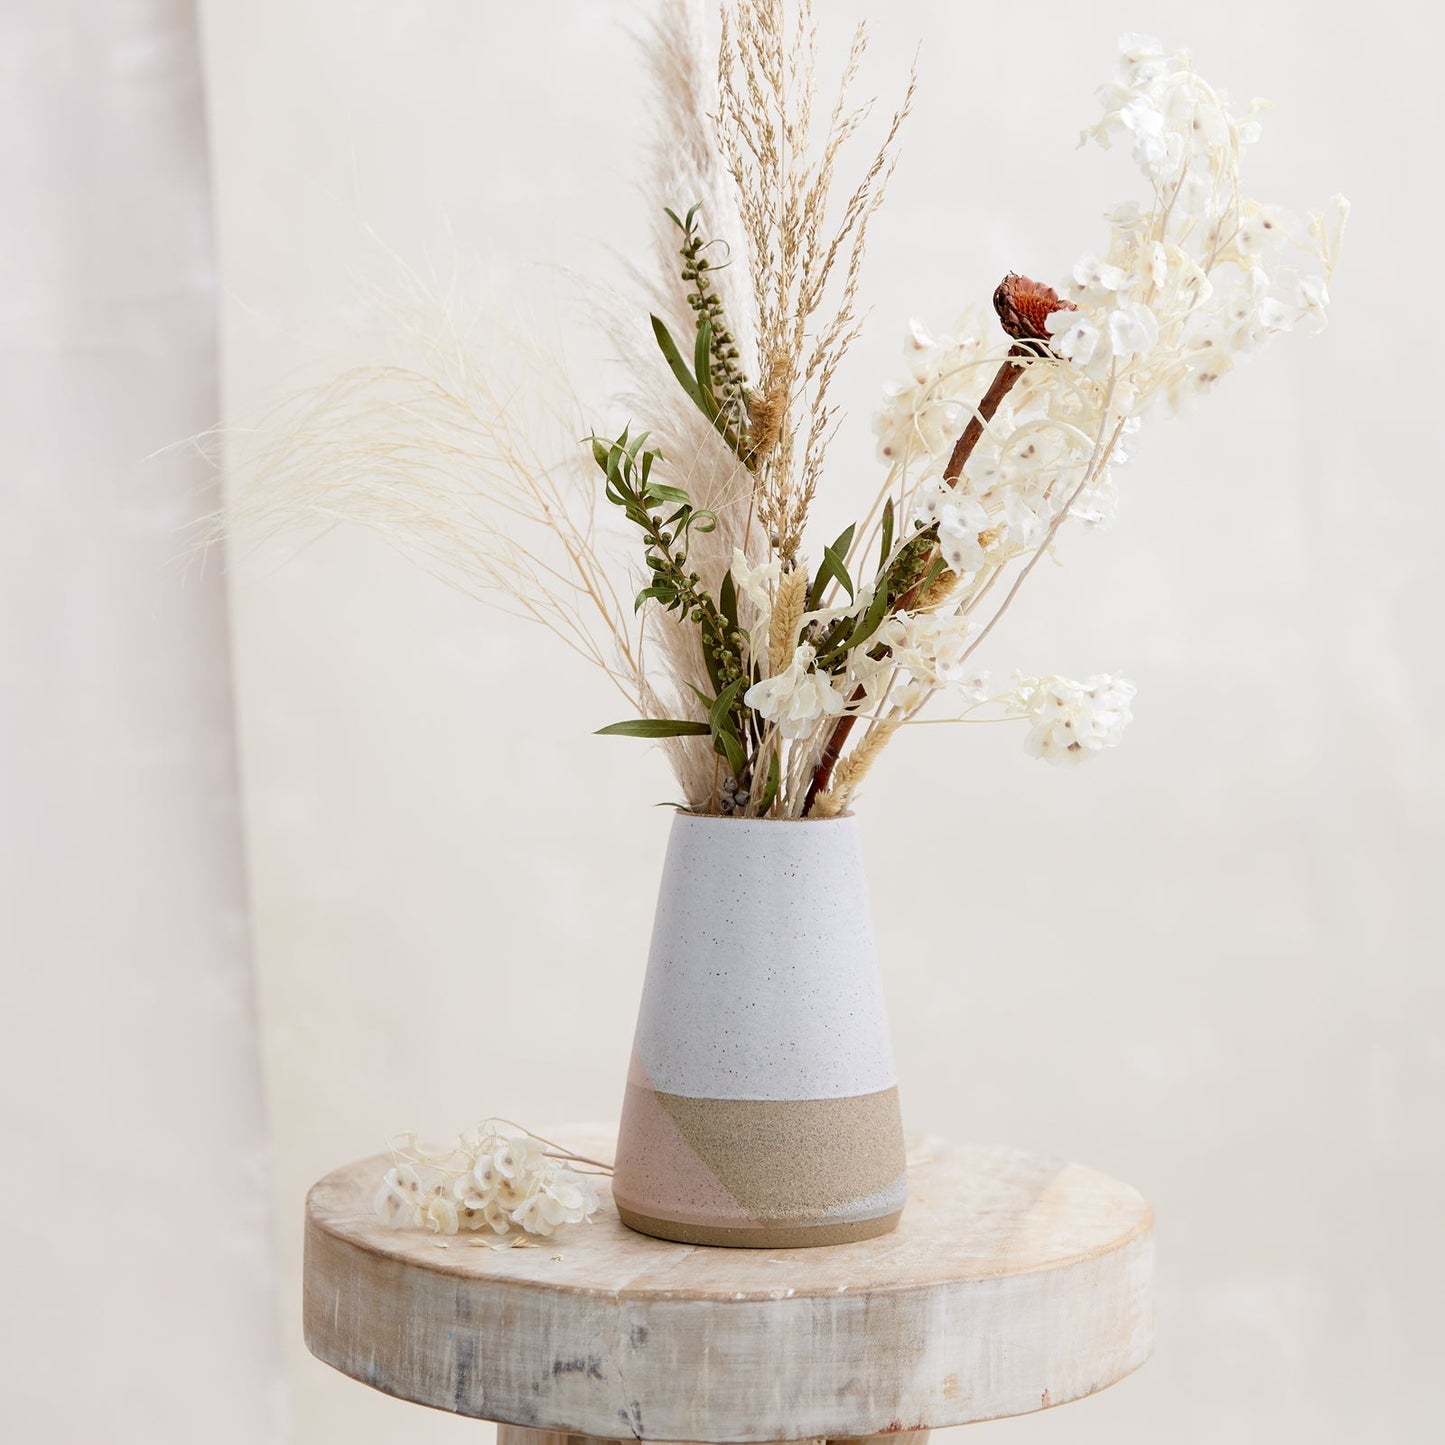 Tidal Handmade Ceramic Taper Vase - Grey and Peach - Second